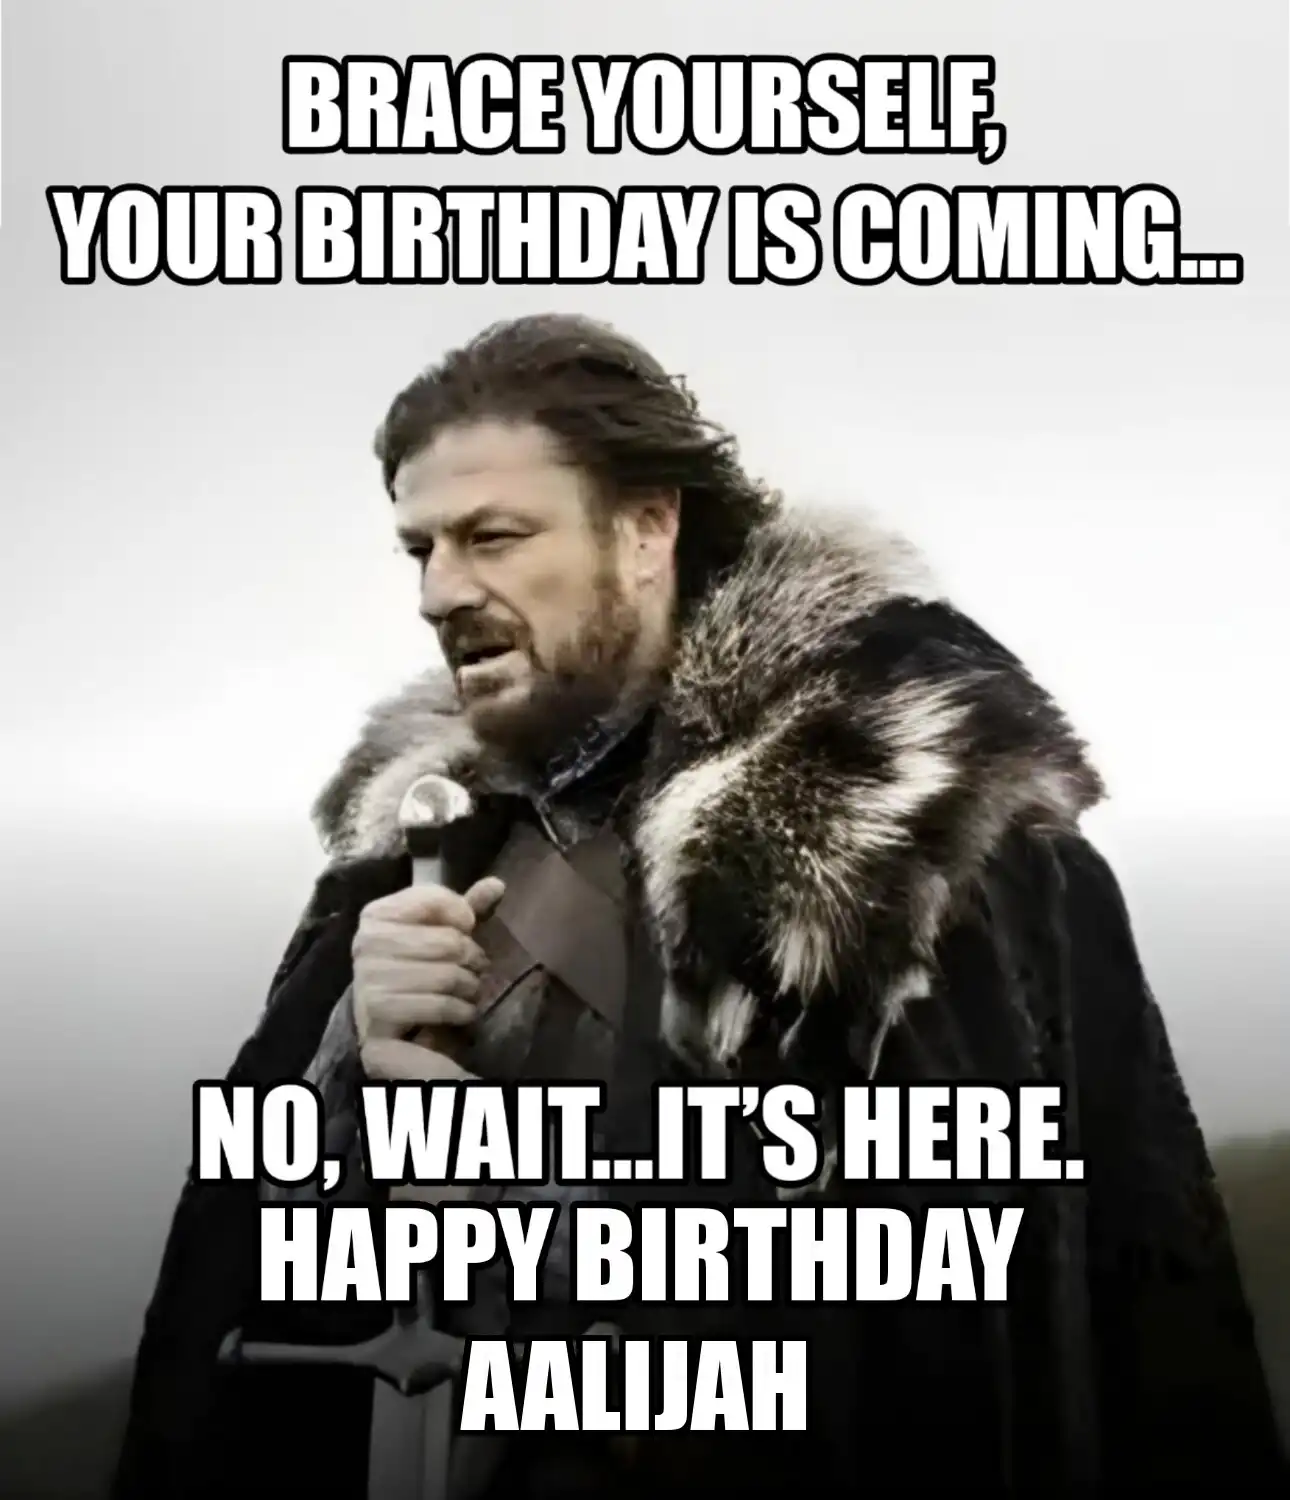 Happy Birthday Aalijah Brace Yourself Your Birthday Is Coming Meme